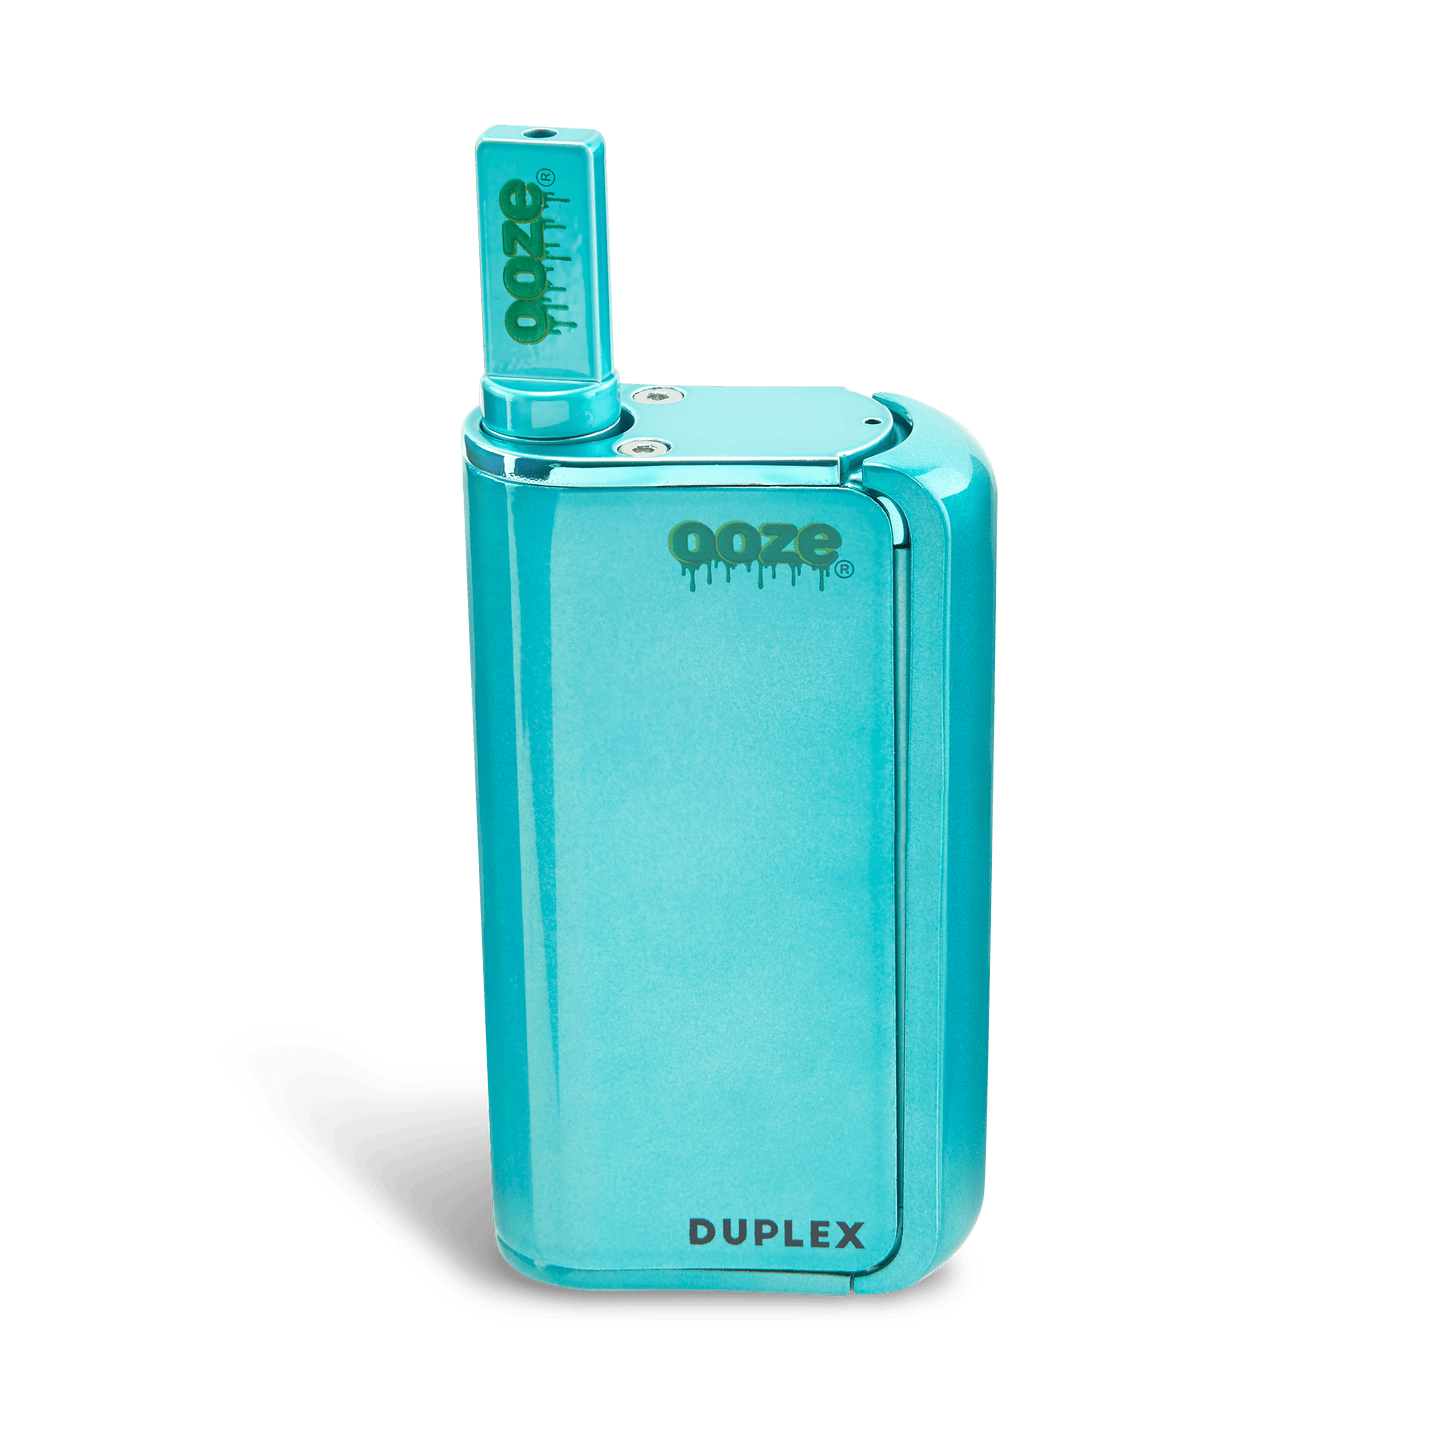 Ooze Batteries and Vapes Ooze Duplex Pro – 900 mAh – Cartridge & Wax Vaporizer